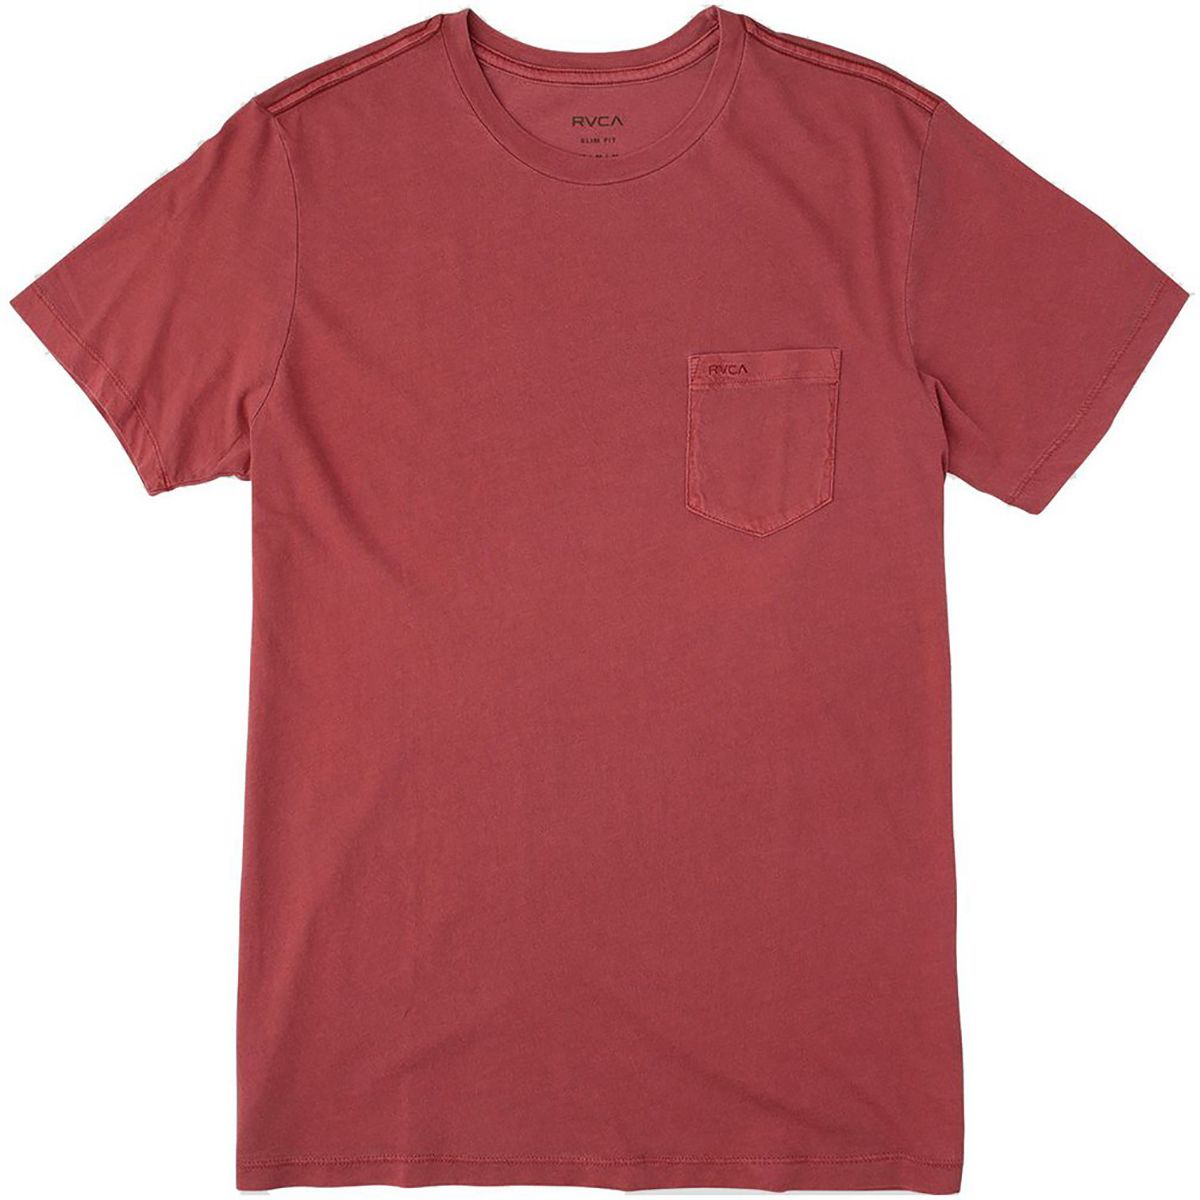 RVCA Men's T-Shirts, stylish comfort clothing